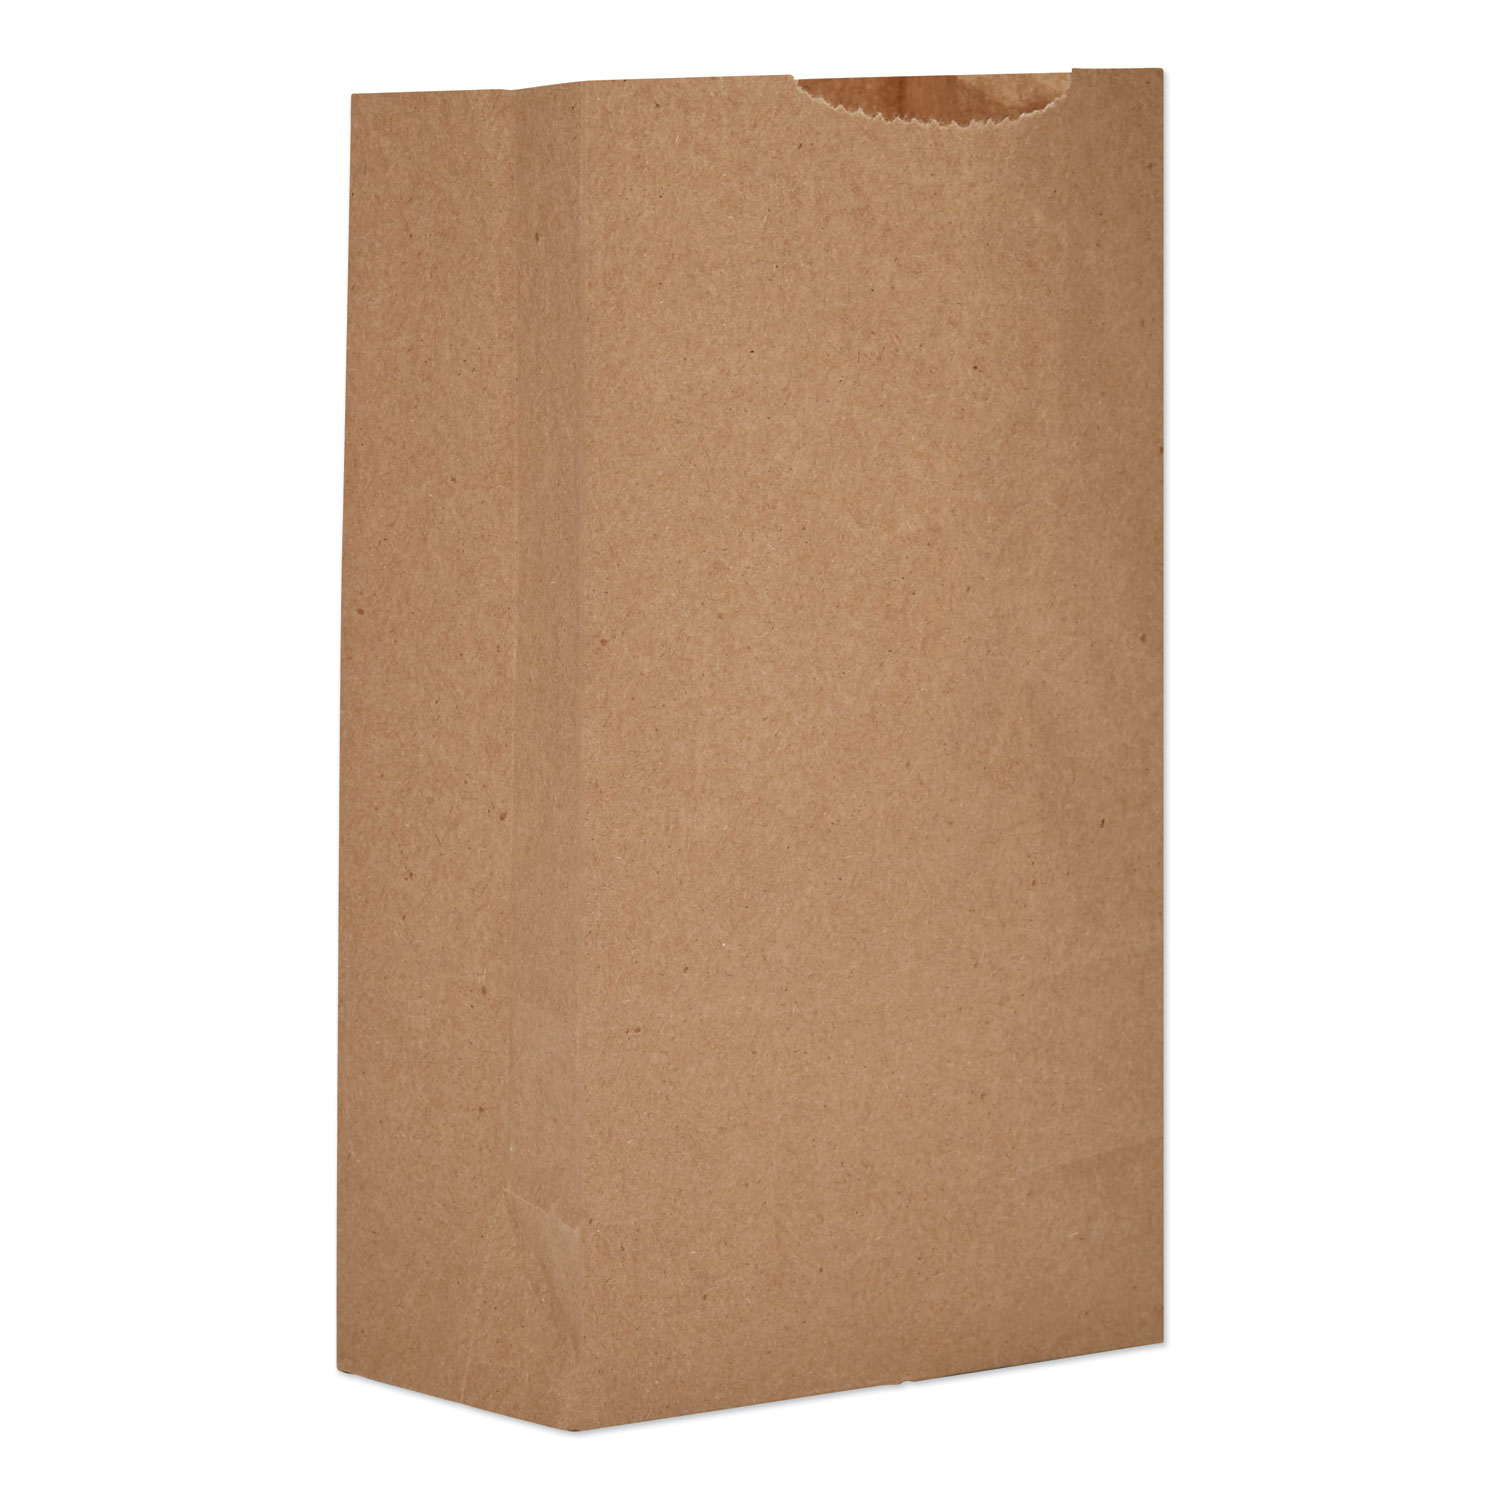  General 30903 Grocery Paper Bags, 52 lbs Capacity, #3, 4.75w x 2.94d x 8.56h, Kraft, 500 Bags (BAGGX3500) 